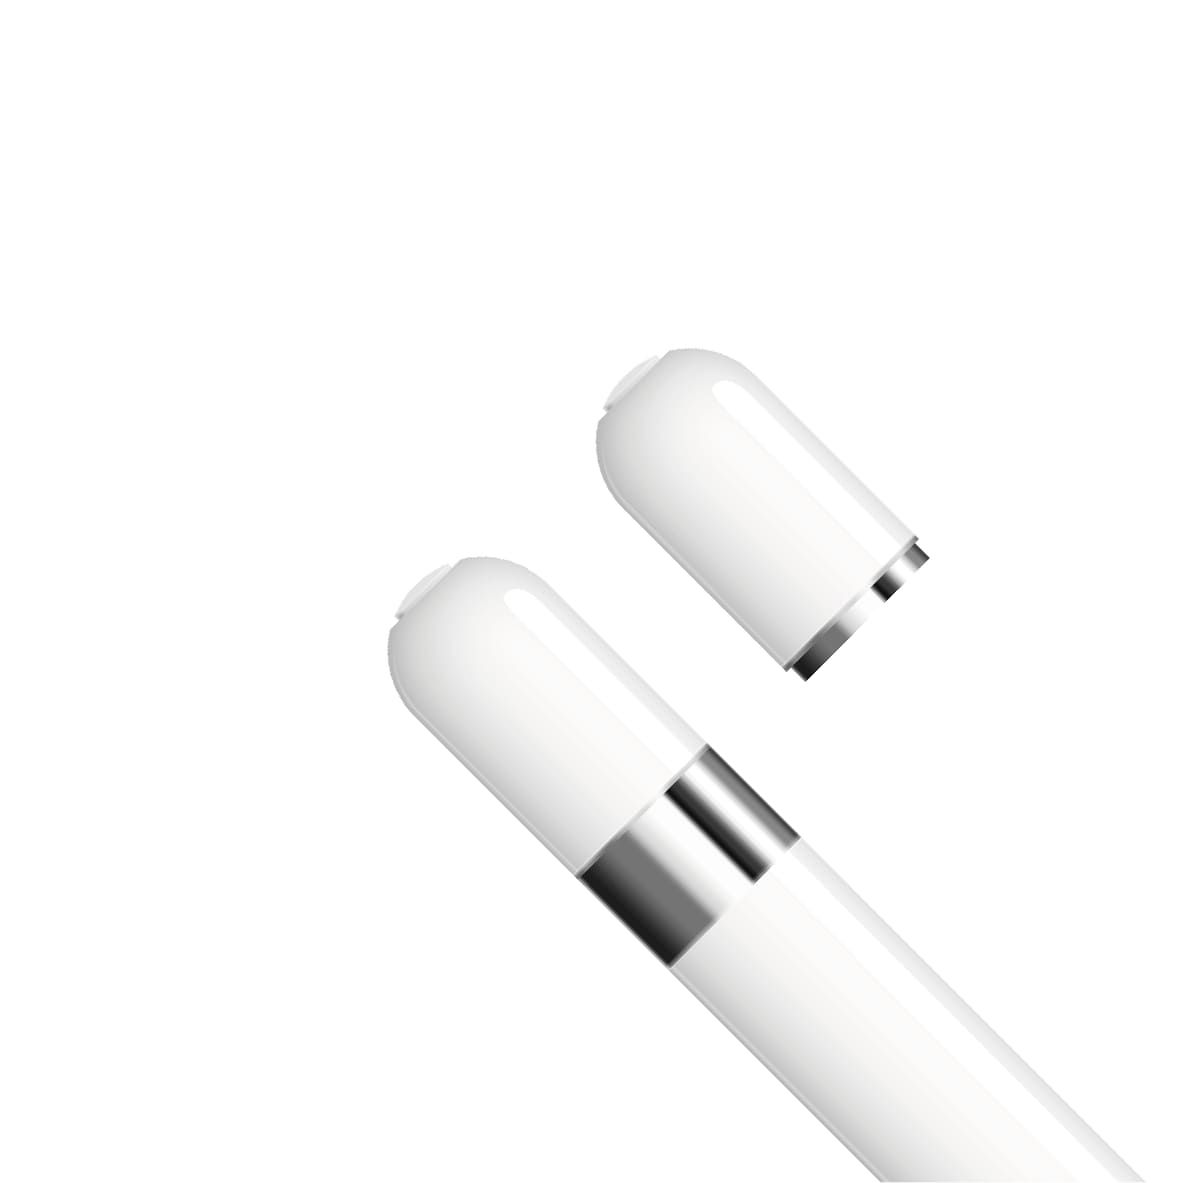 Náhradní čepička Pencil Cap pro Apple Pencil 1.generace, bílá